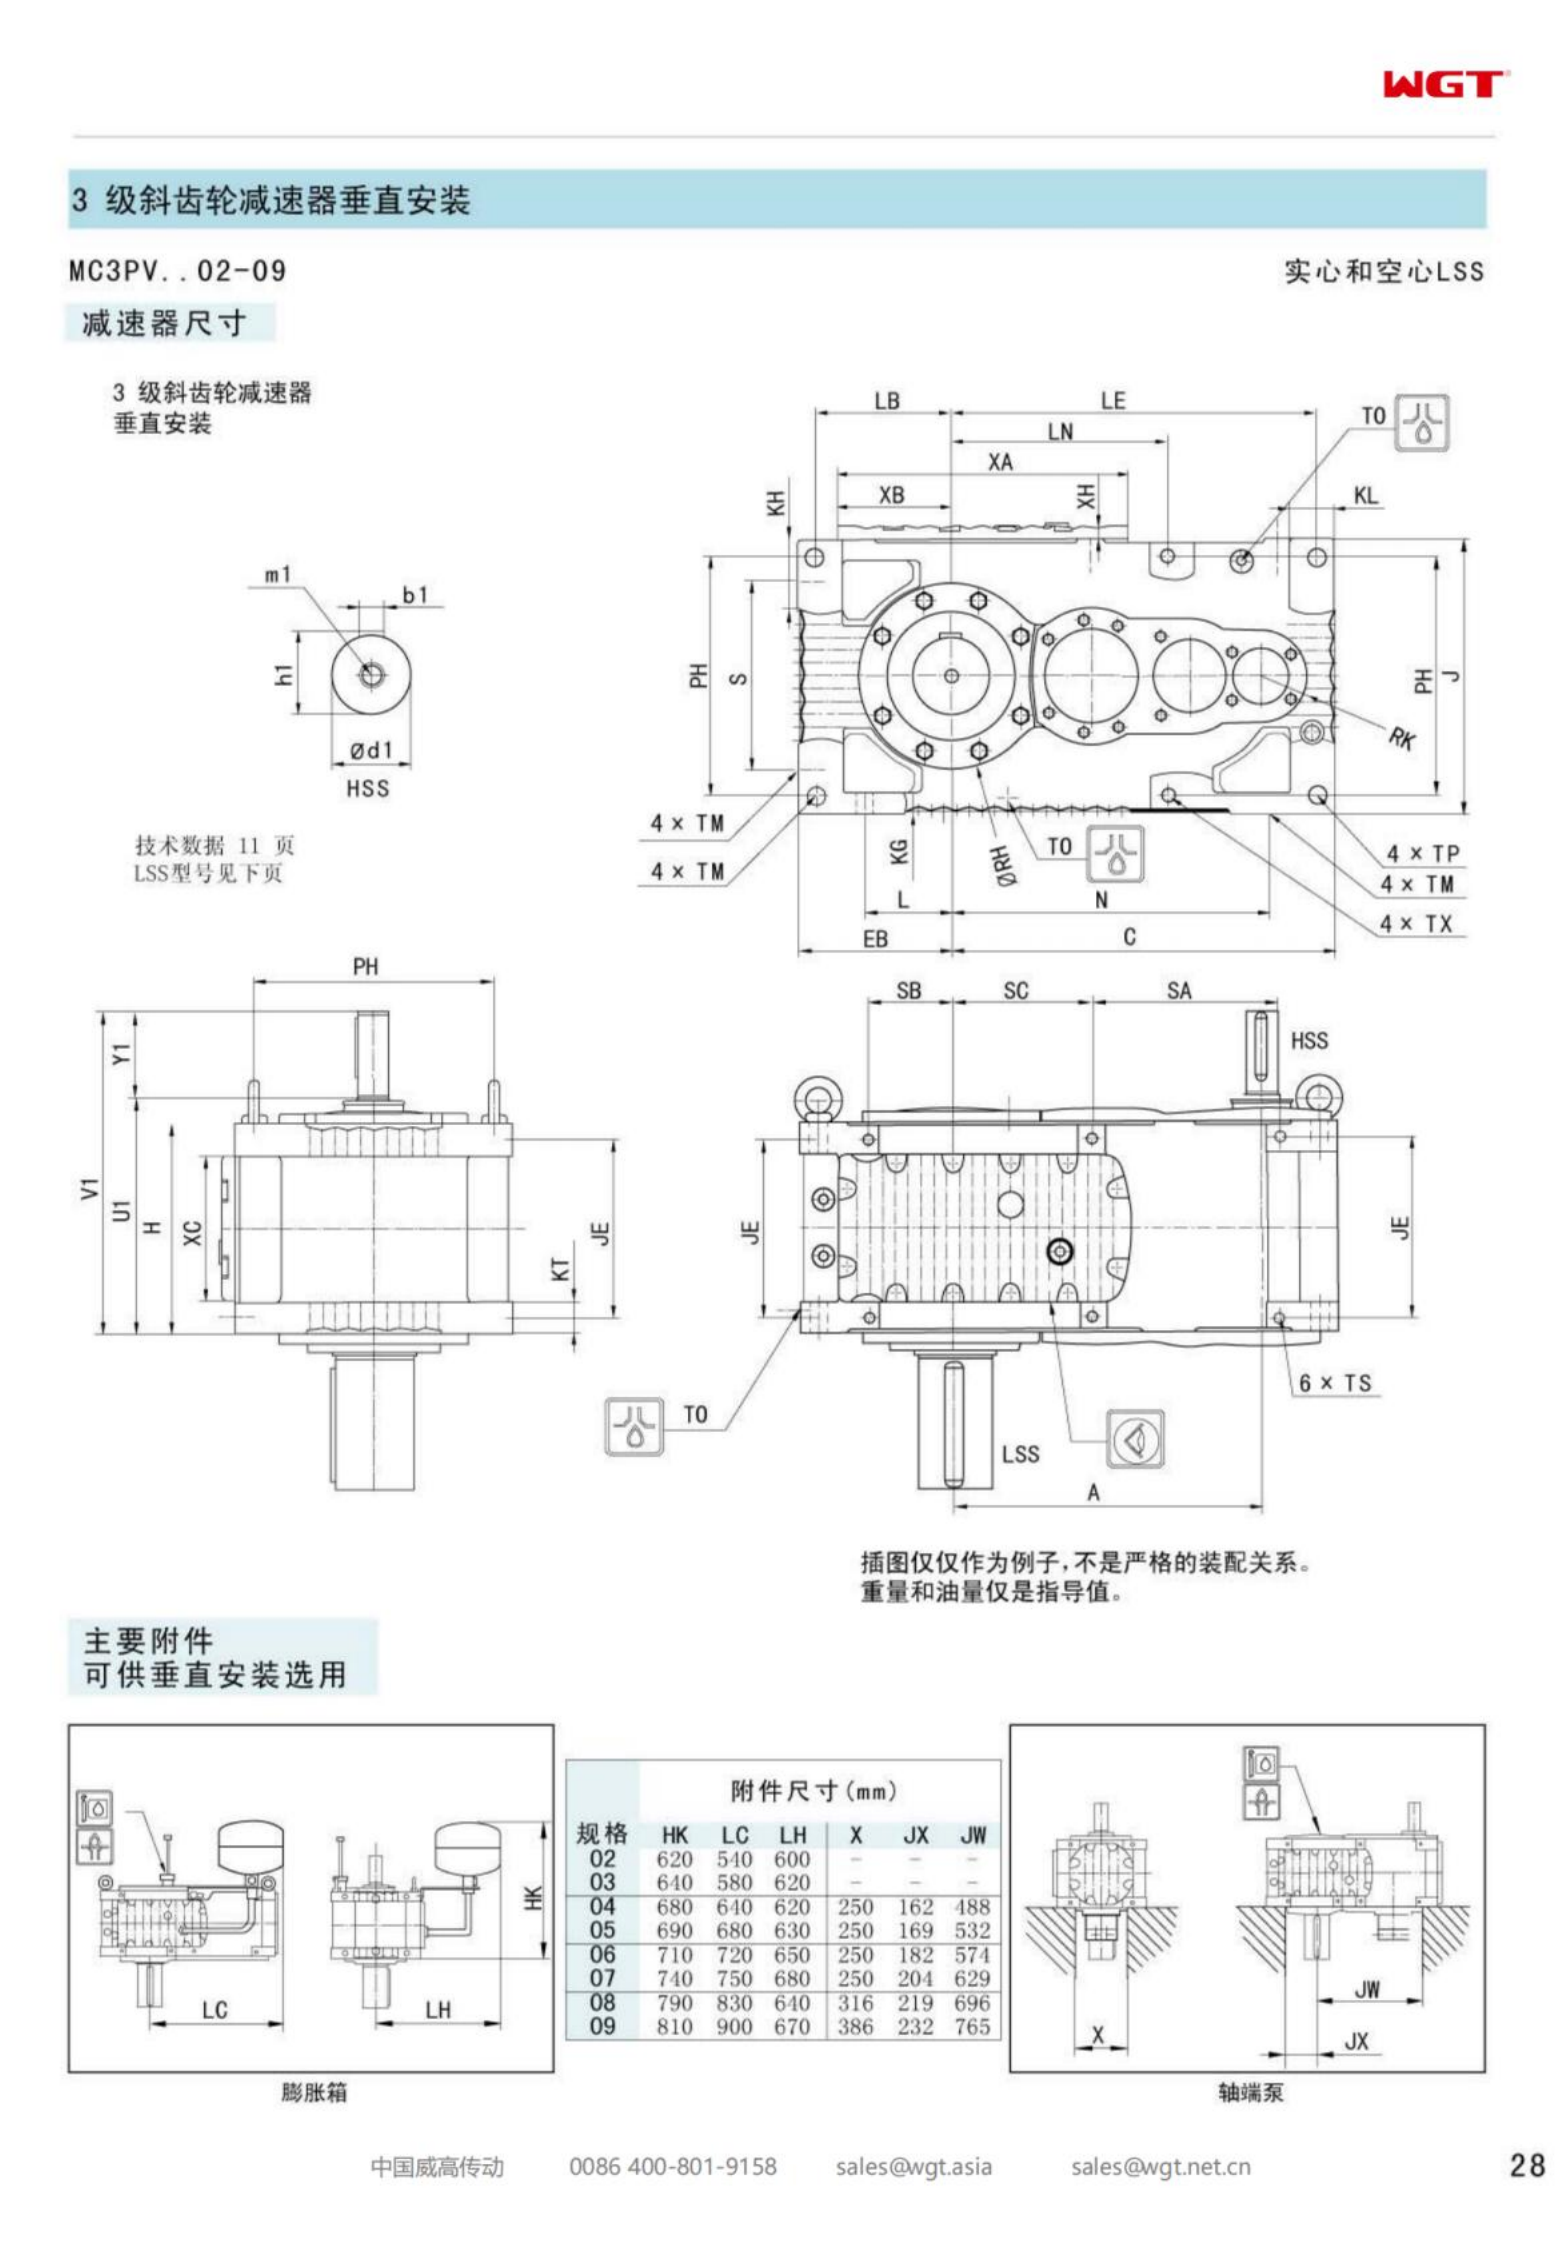 MC3PVST05 replaces _SEW_MC_Series gearbox (patent)